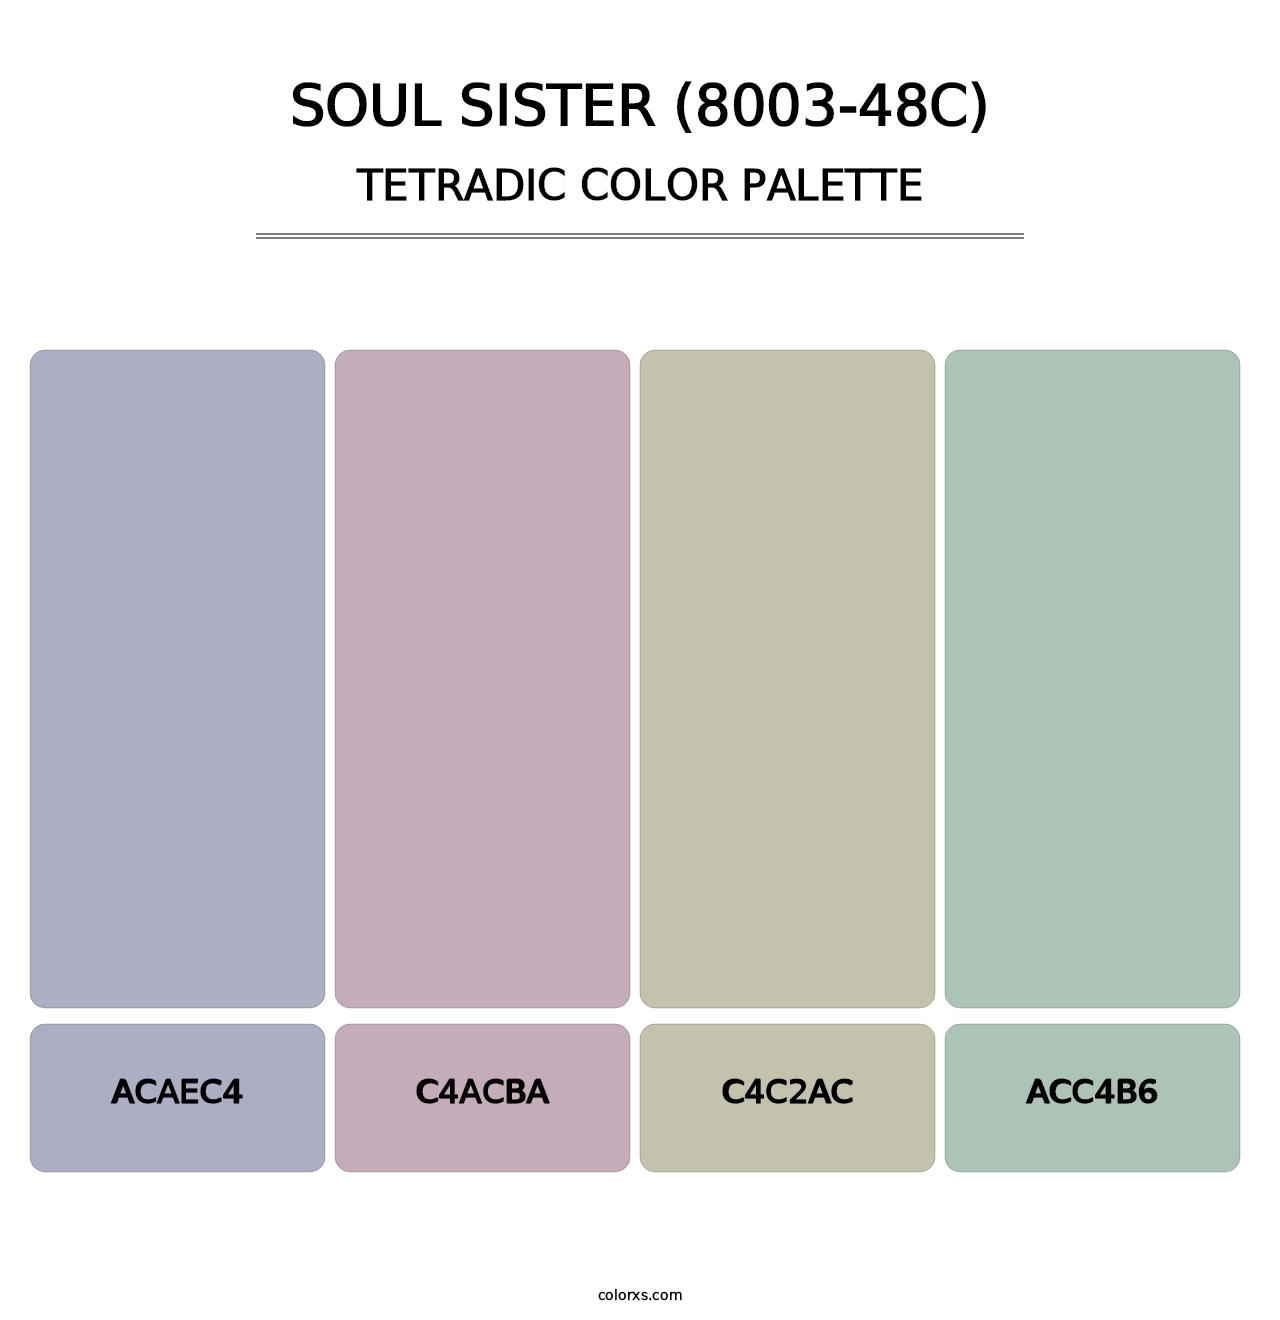 Soul Sister (8003-48C) - Tetradic Color Palette